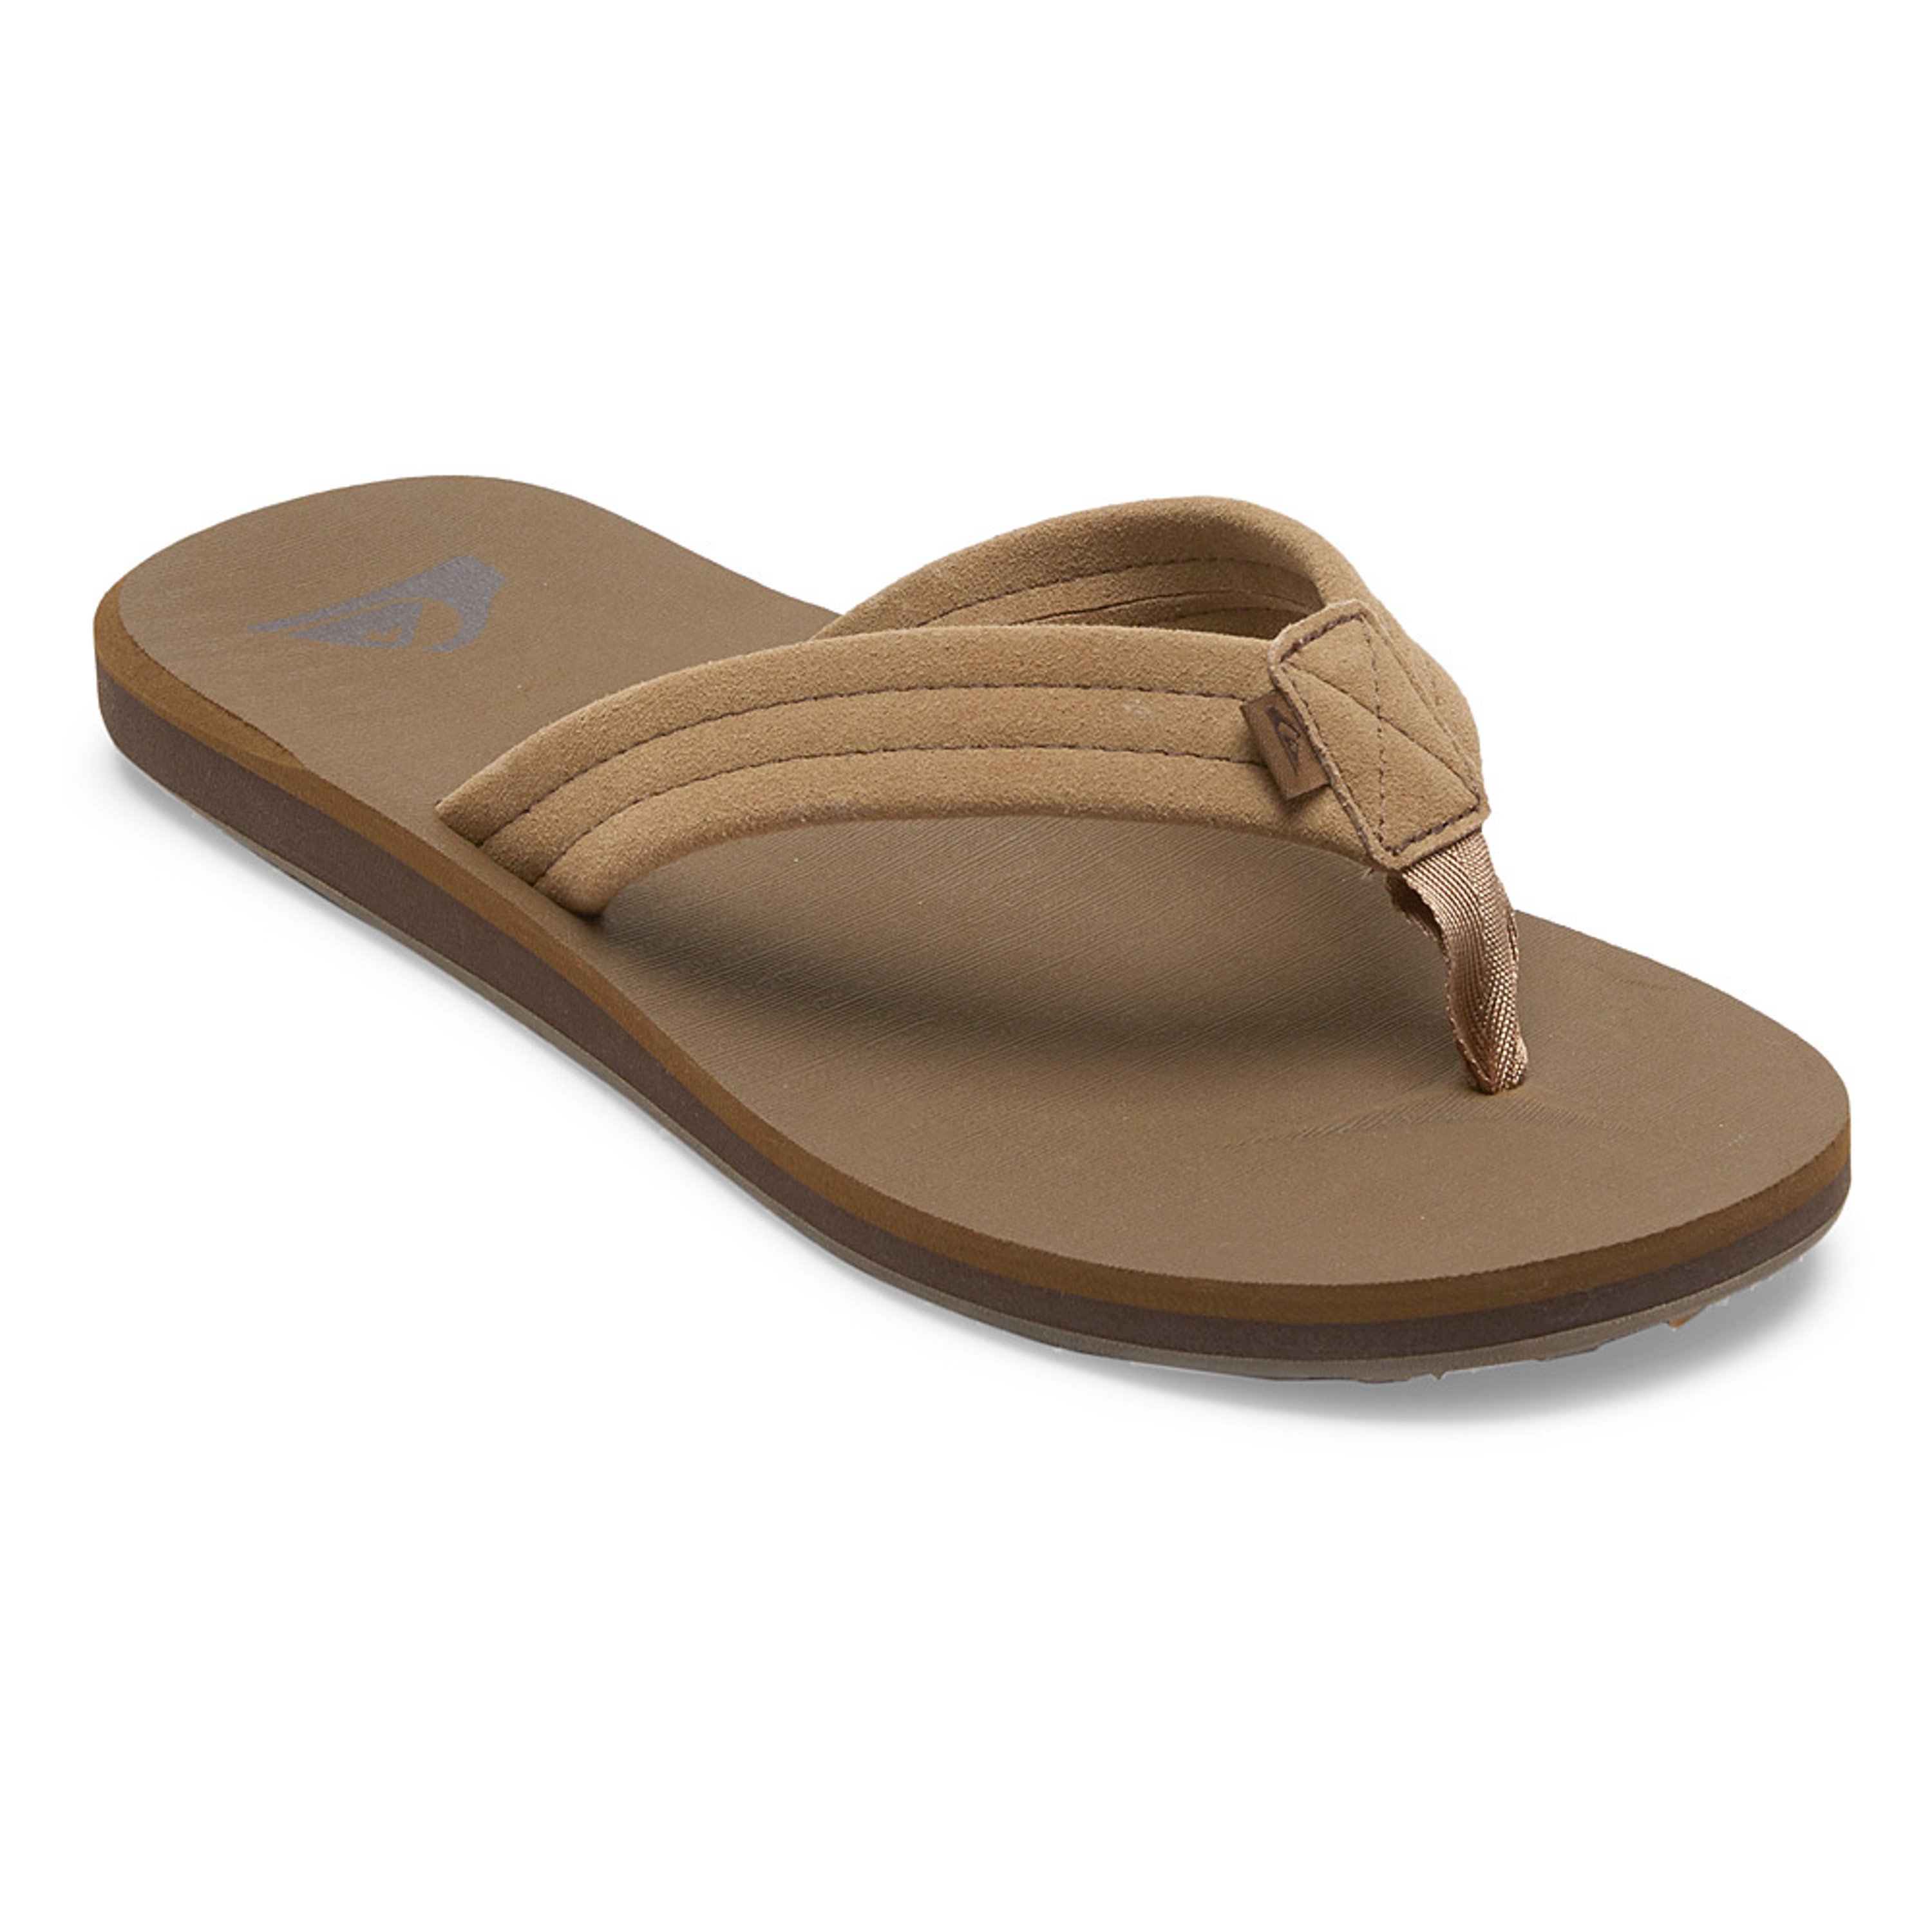 Myers Flip Sport Mode Tan/Tan - Men's Sandals